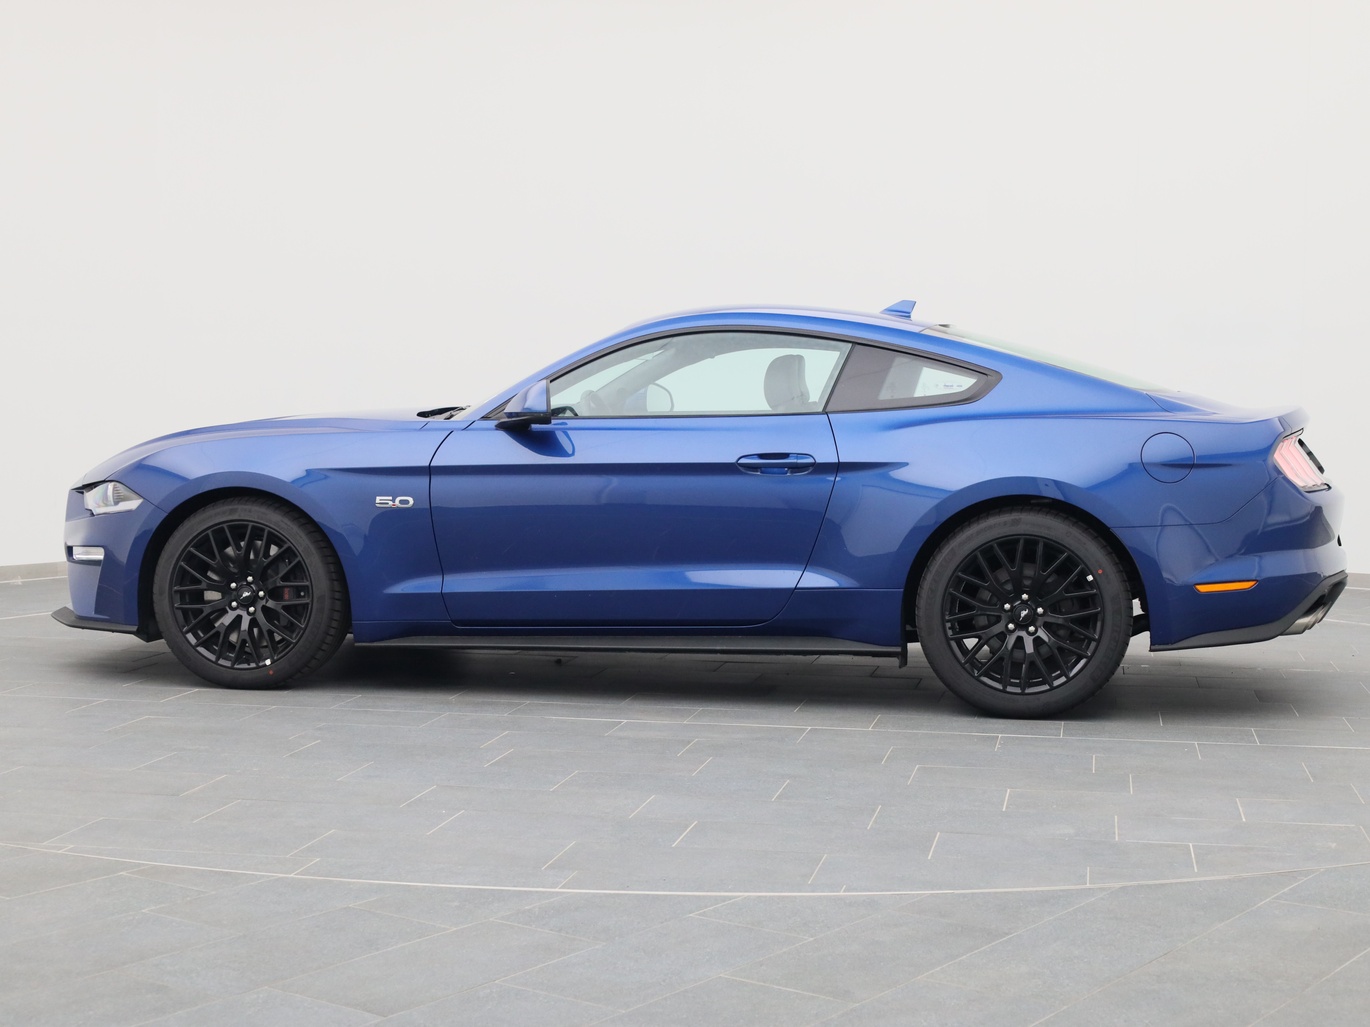  Ford Mustang GT Coupé V8 450PS / Premium 2 / Magne in Atlas Blau von Links